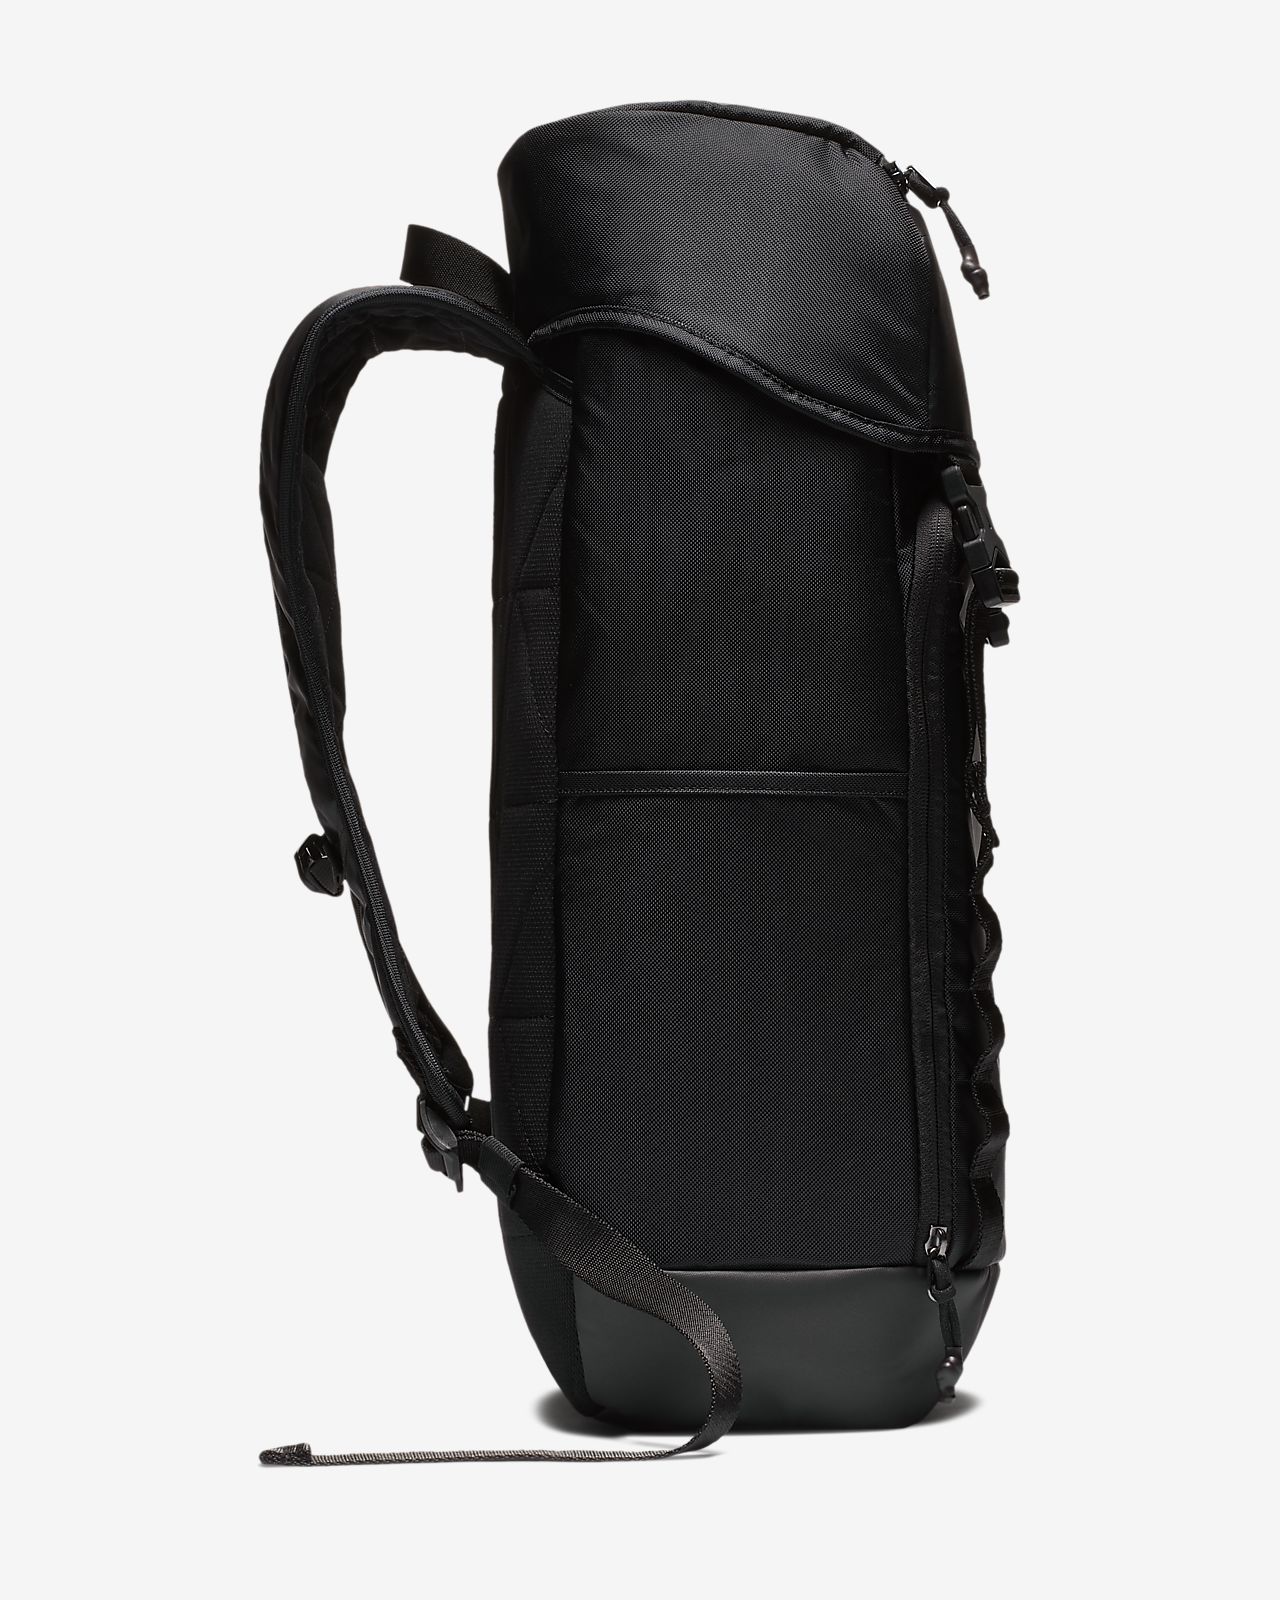 nike vapor speed 2.0 34l backpack